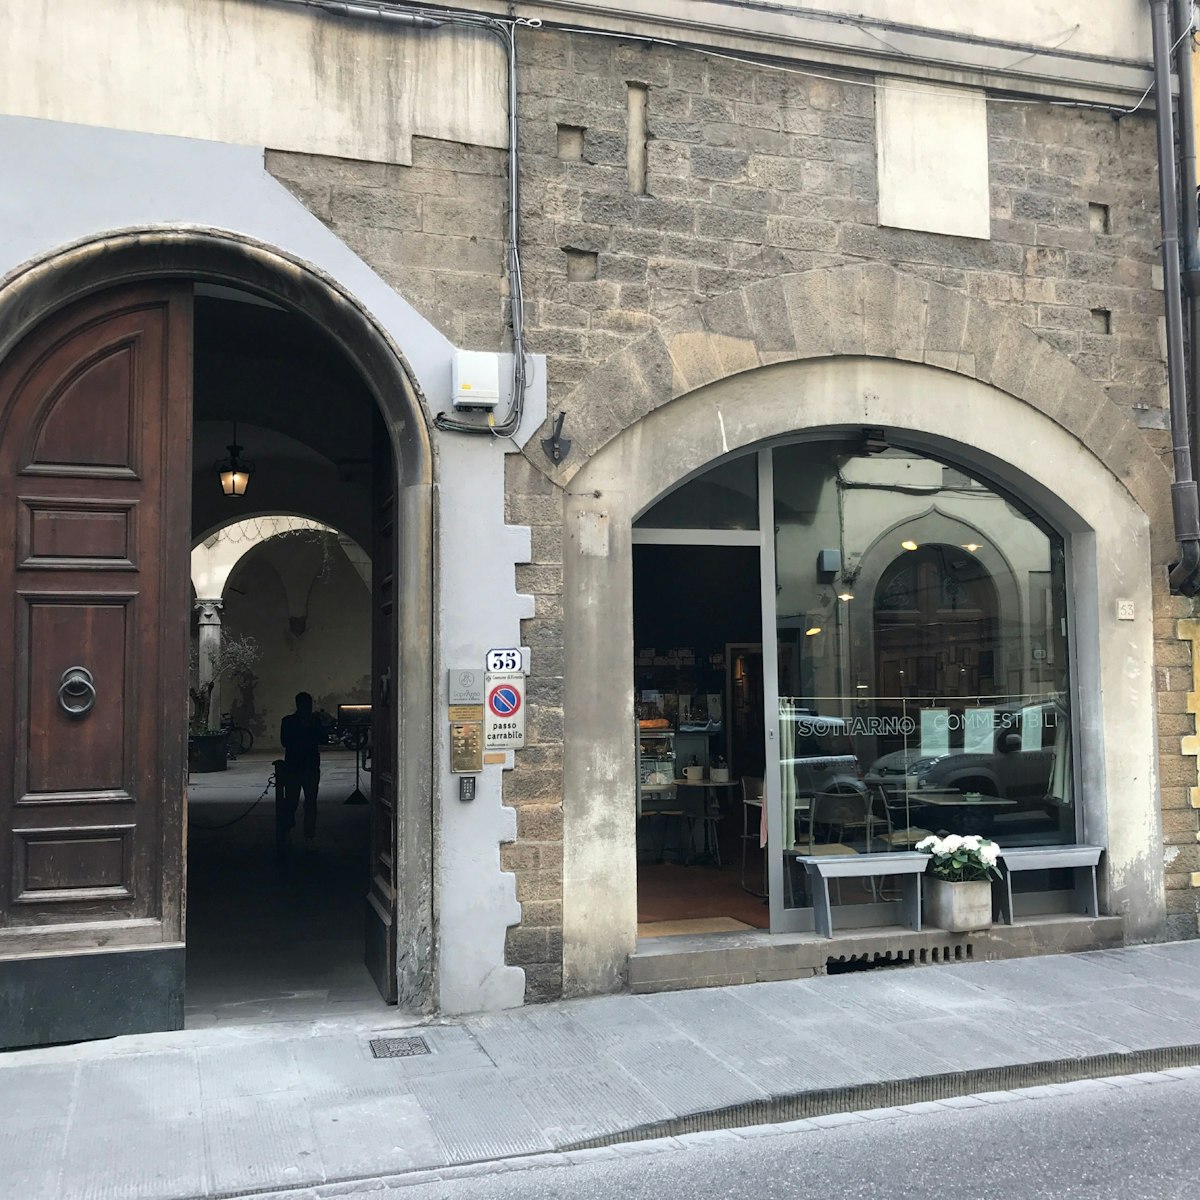 Restaurant entrance, SottArno.